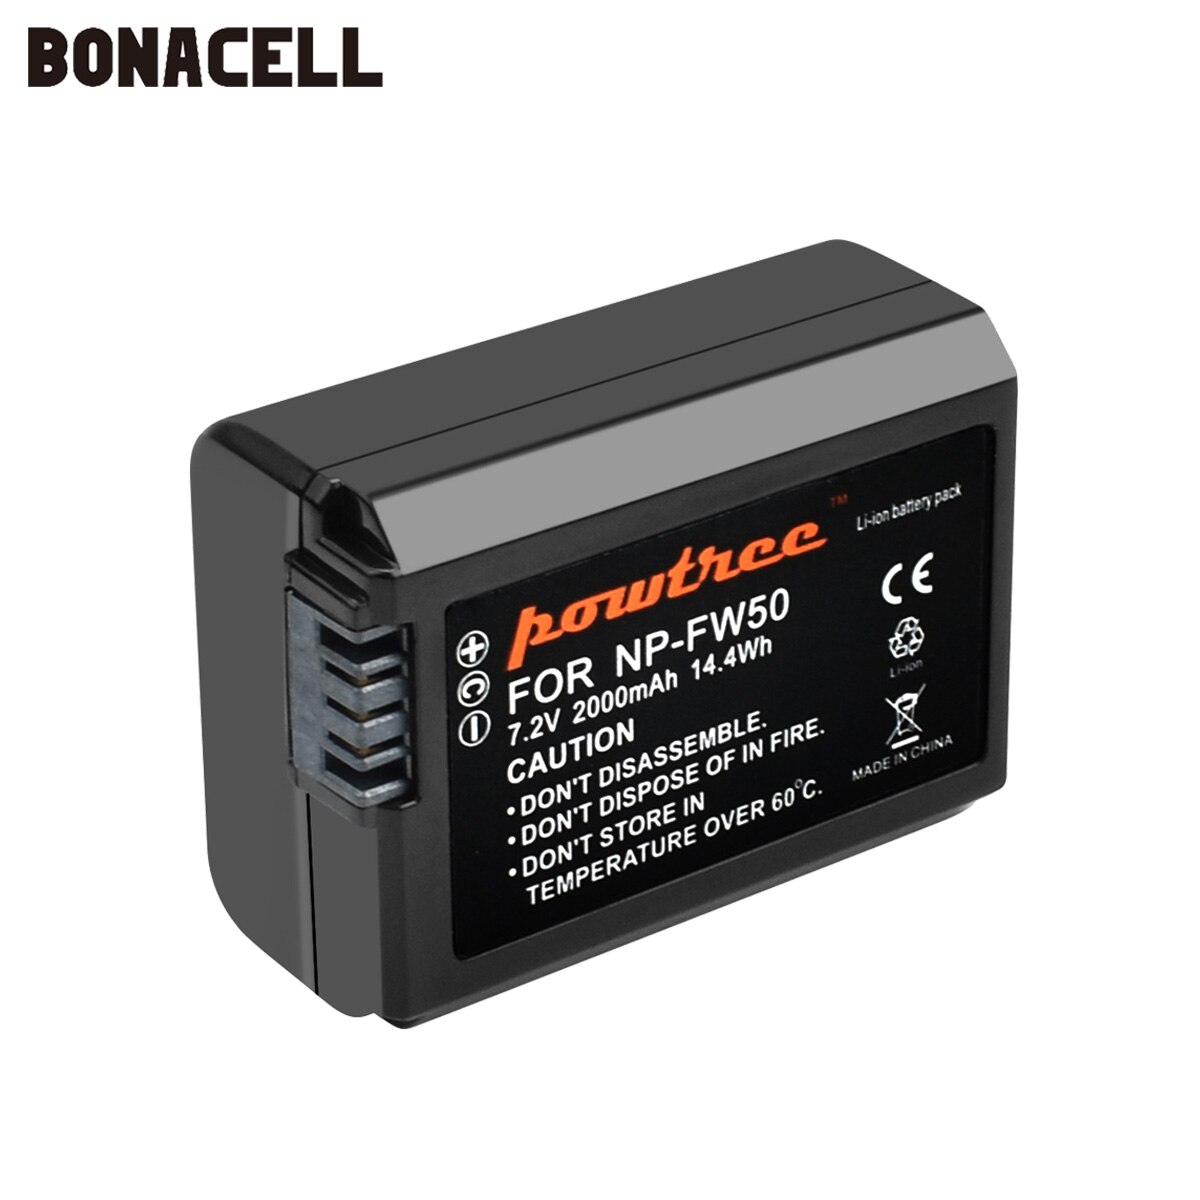 Bonacell 2000mah NP-FW50 NP FW50 batería AKKU para Sony NEX-7 NEX-5N NEX-5R NEX-F3 NEX-3D alfa a5000 a6000 DSC-RX10 Alpha 7 a7II: 1 Pack Battery